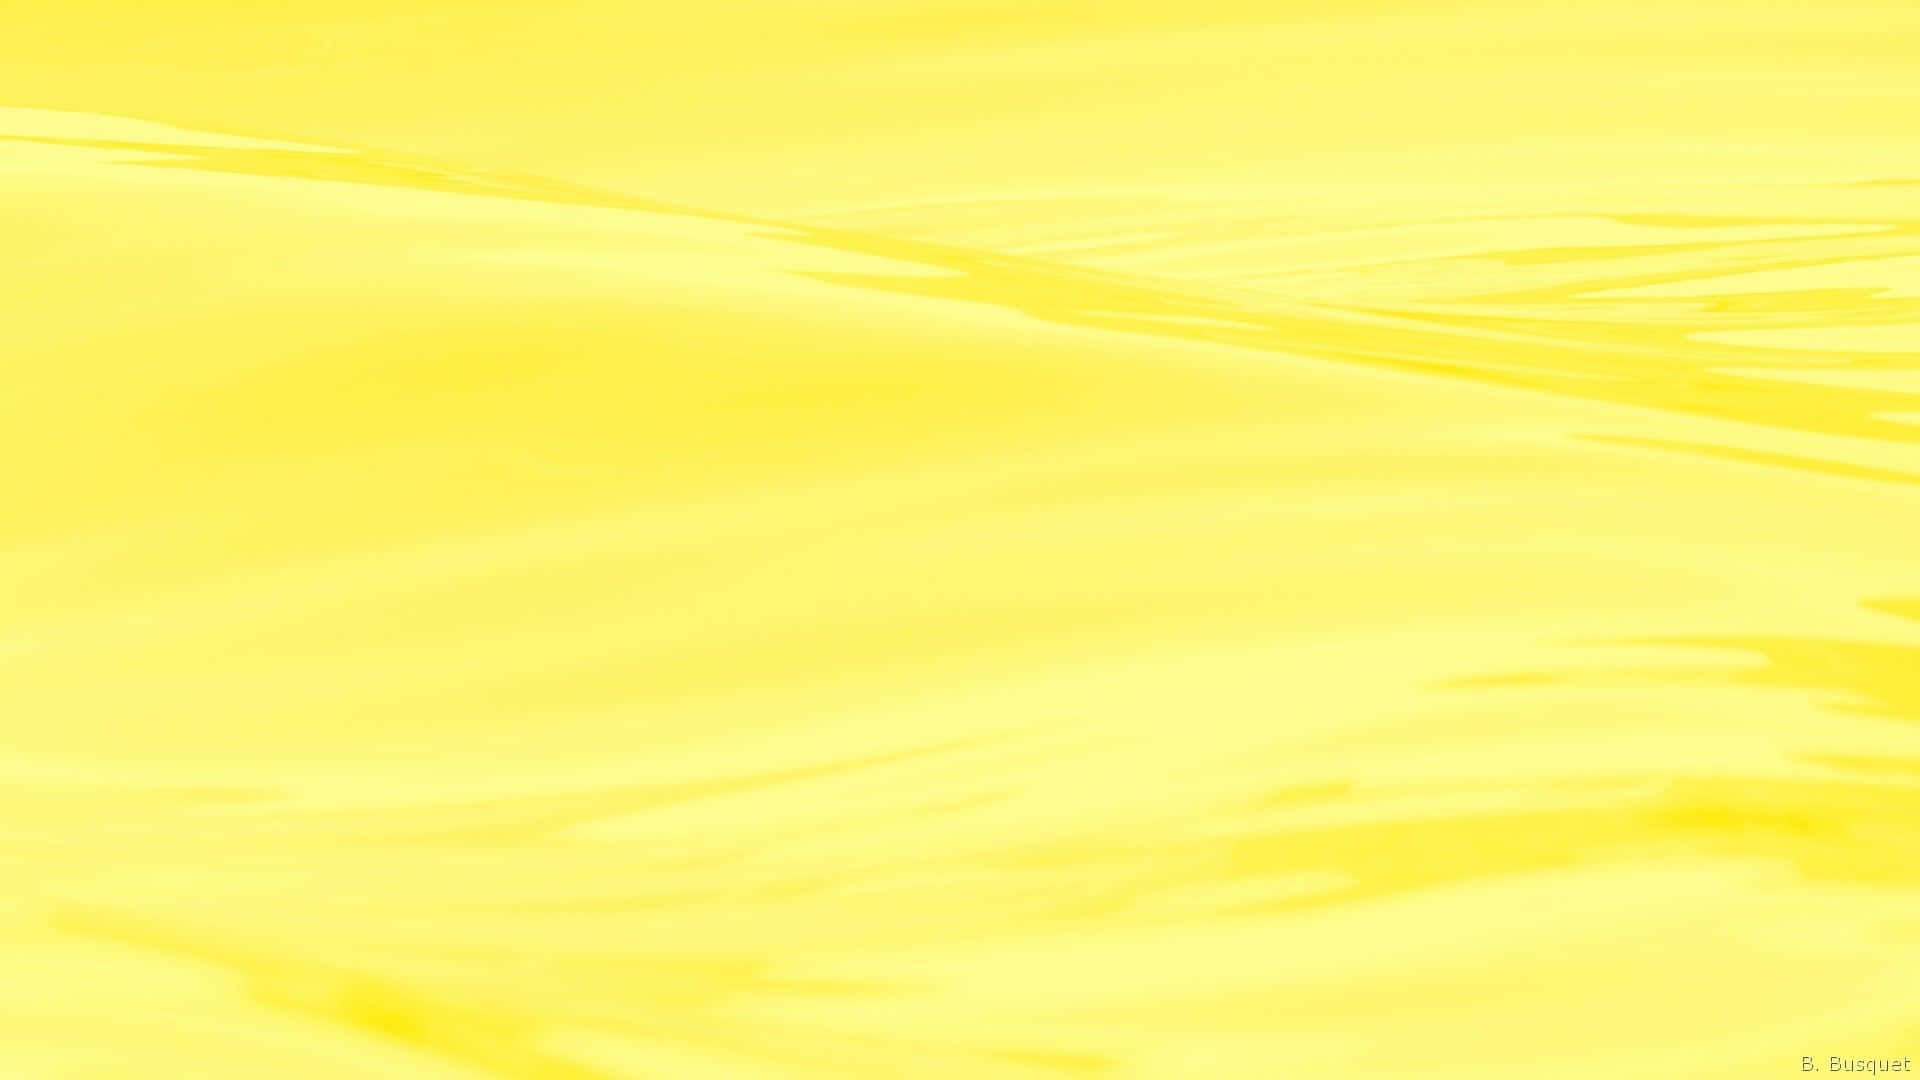 Bright and beautiful yellow background